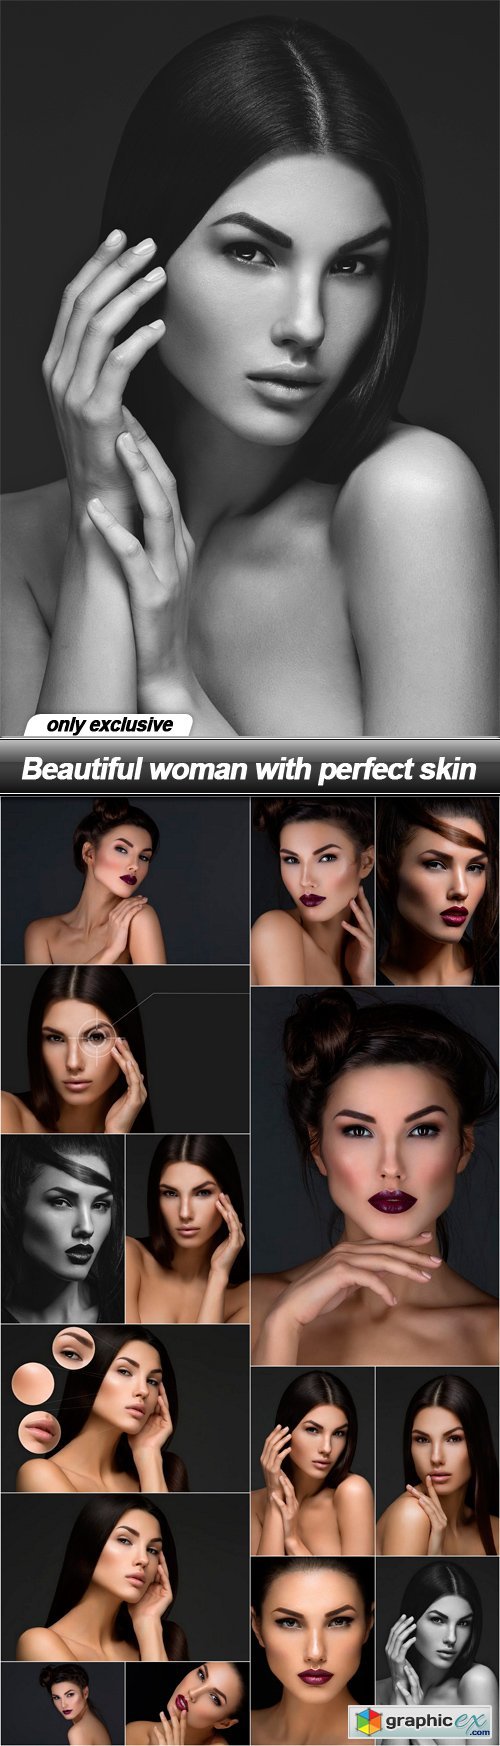 Beautiful woman with perfect skin - 15 UHQ JPEG